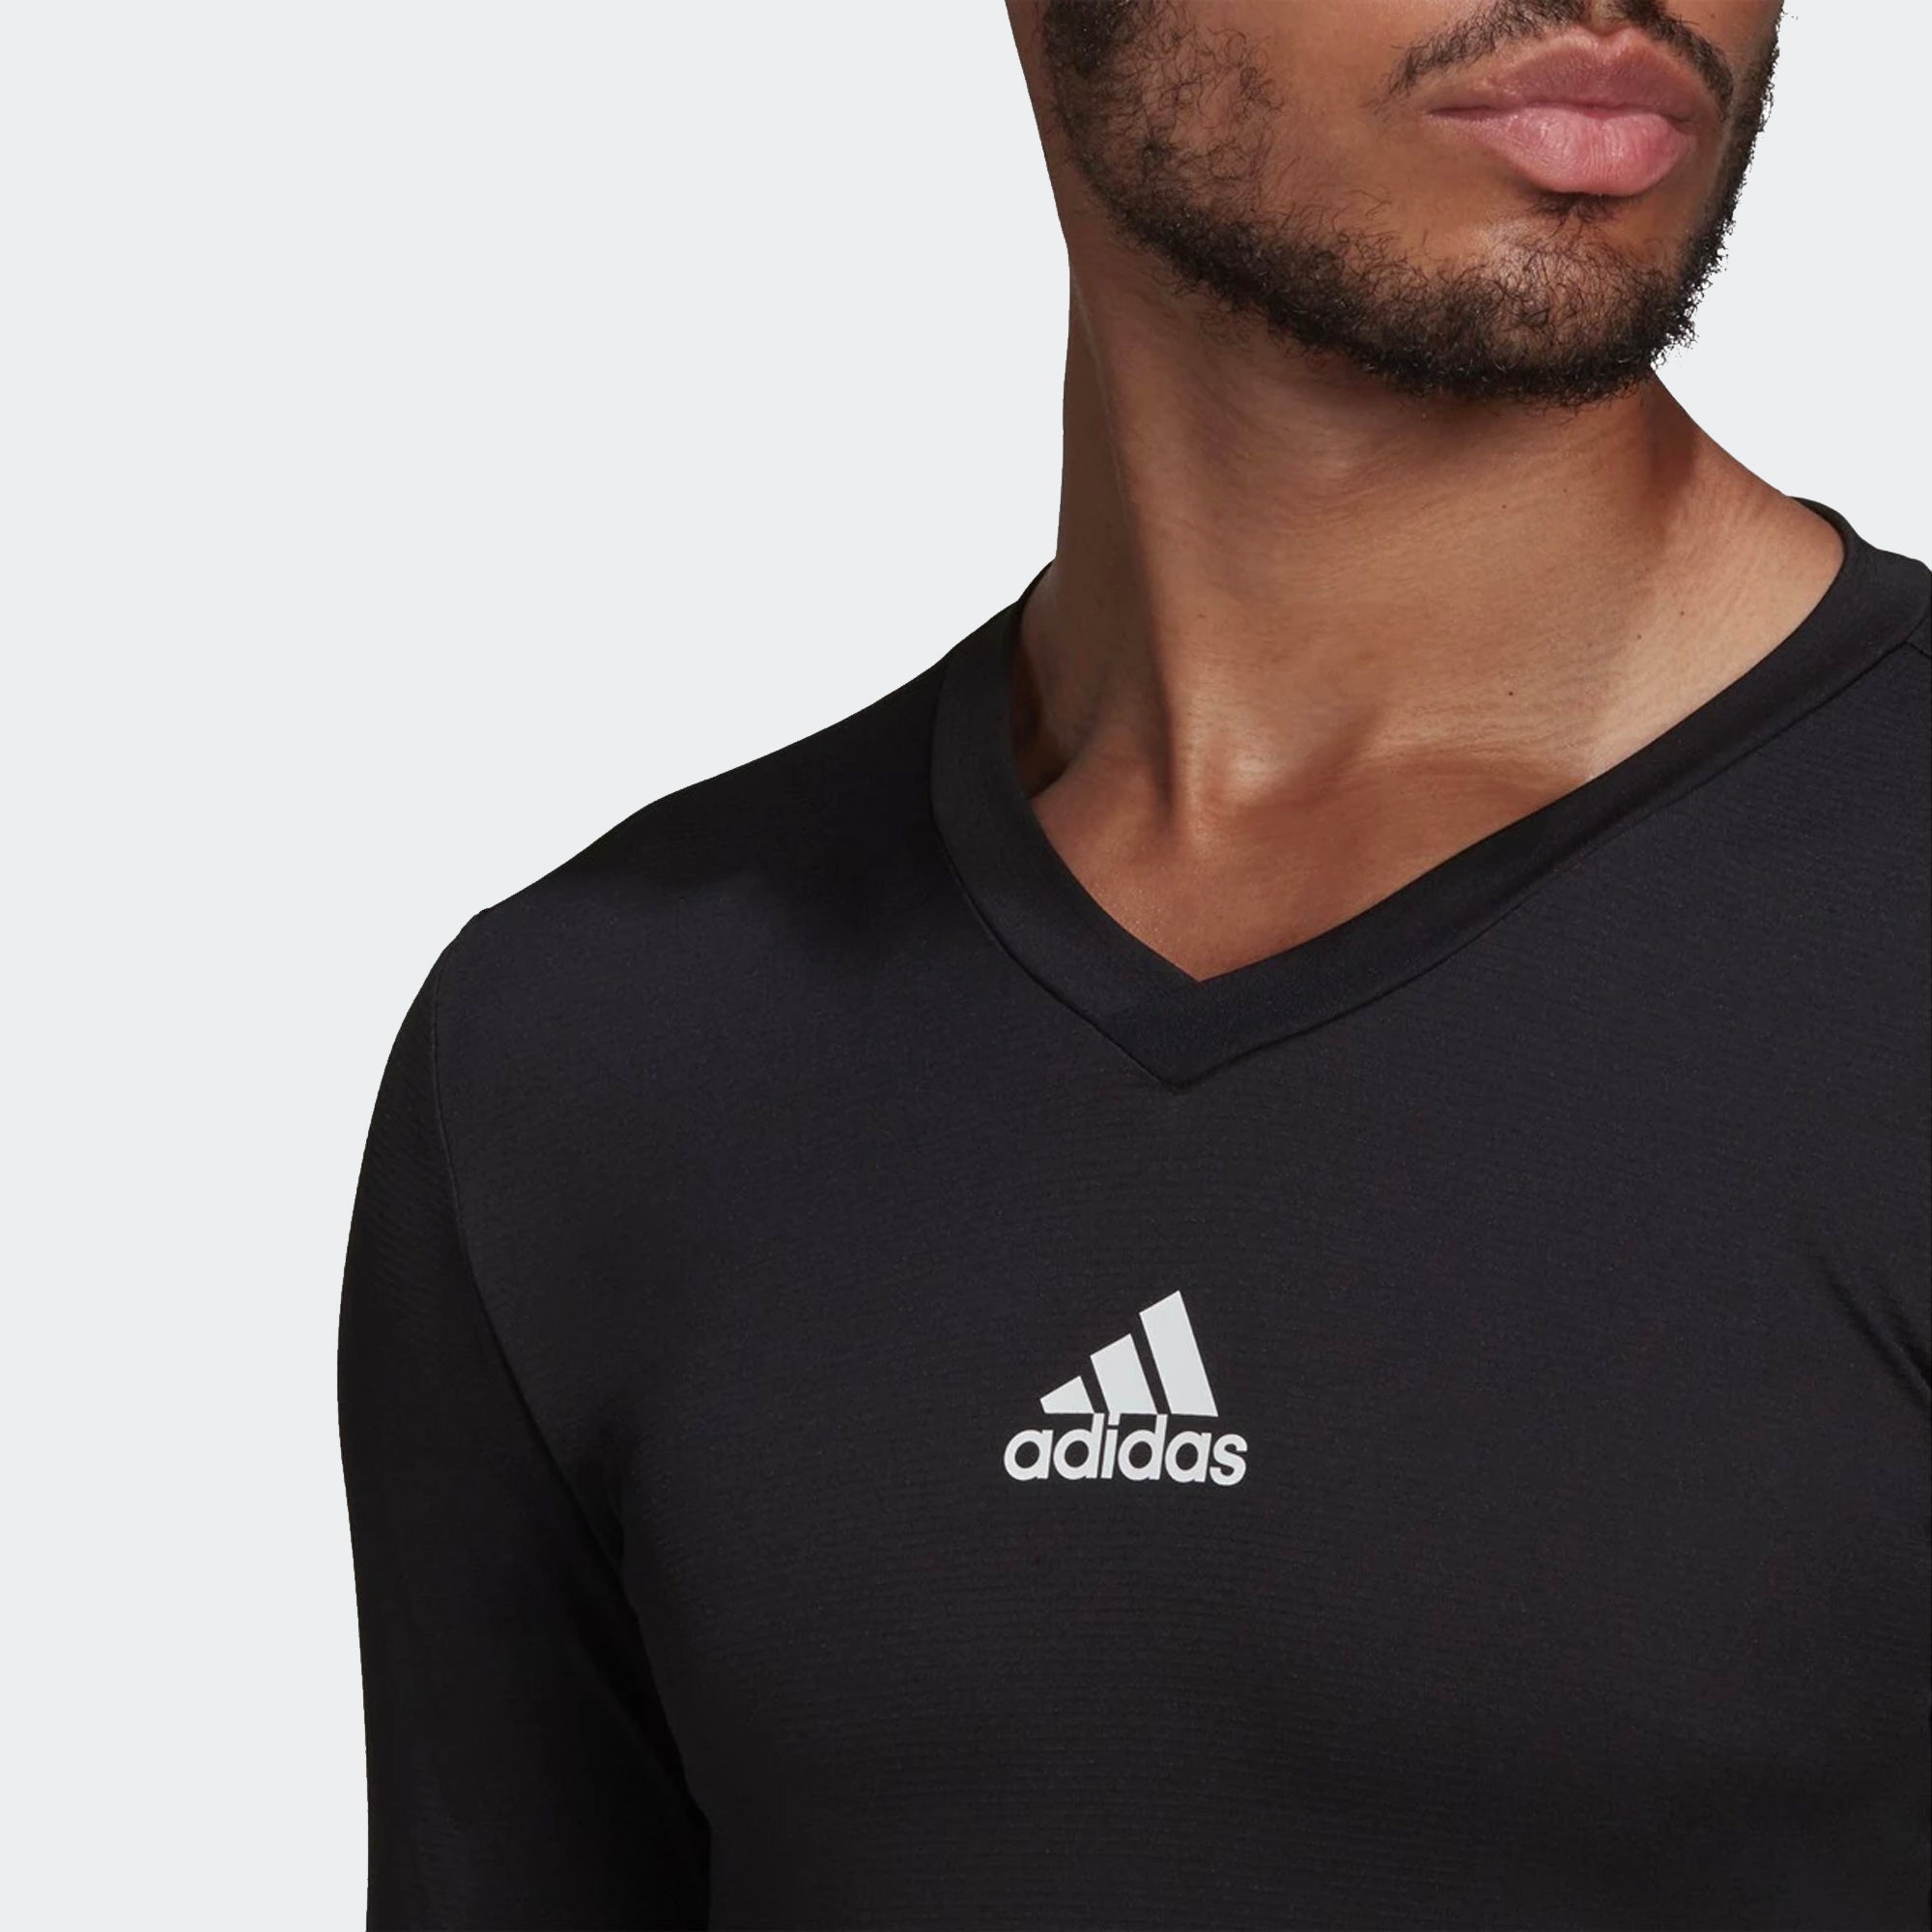 Adidas Men's Original Short Slv 3 Stripe Essential California T-Shirt Gray  XL